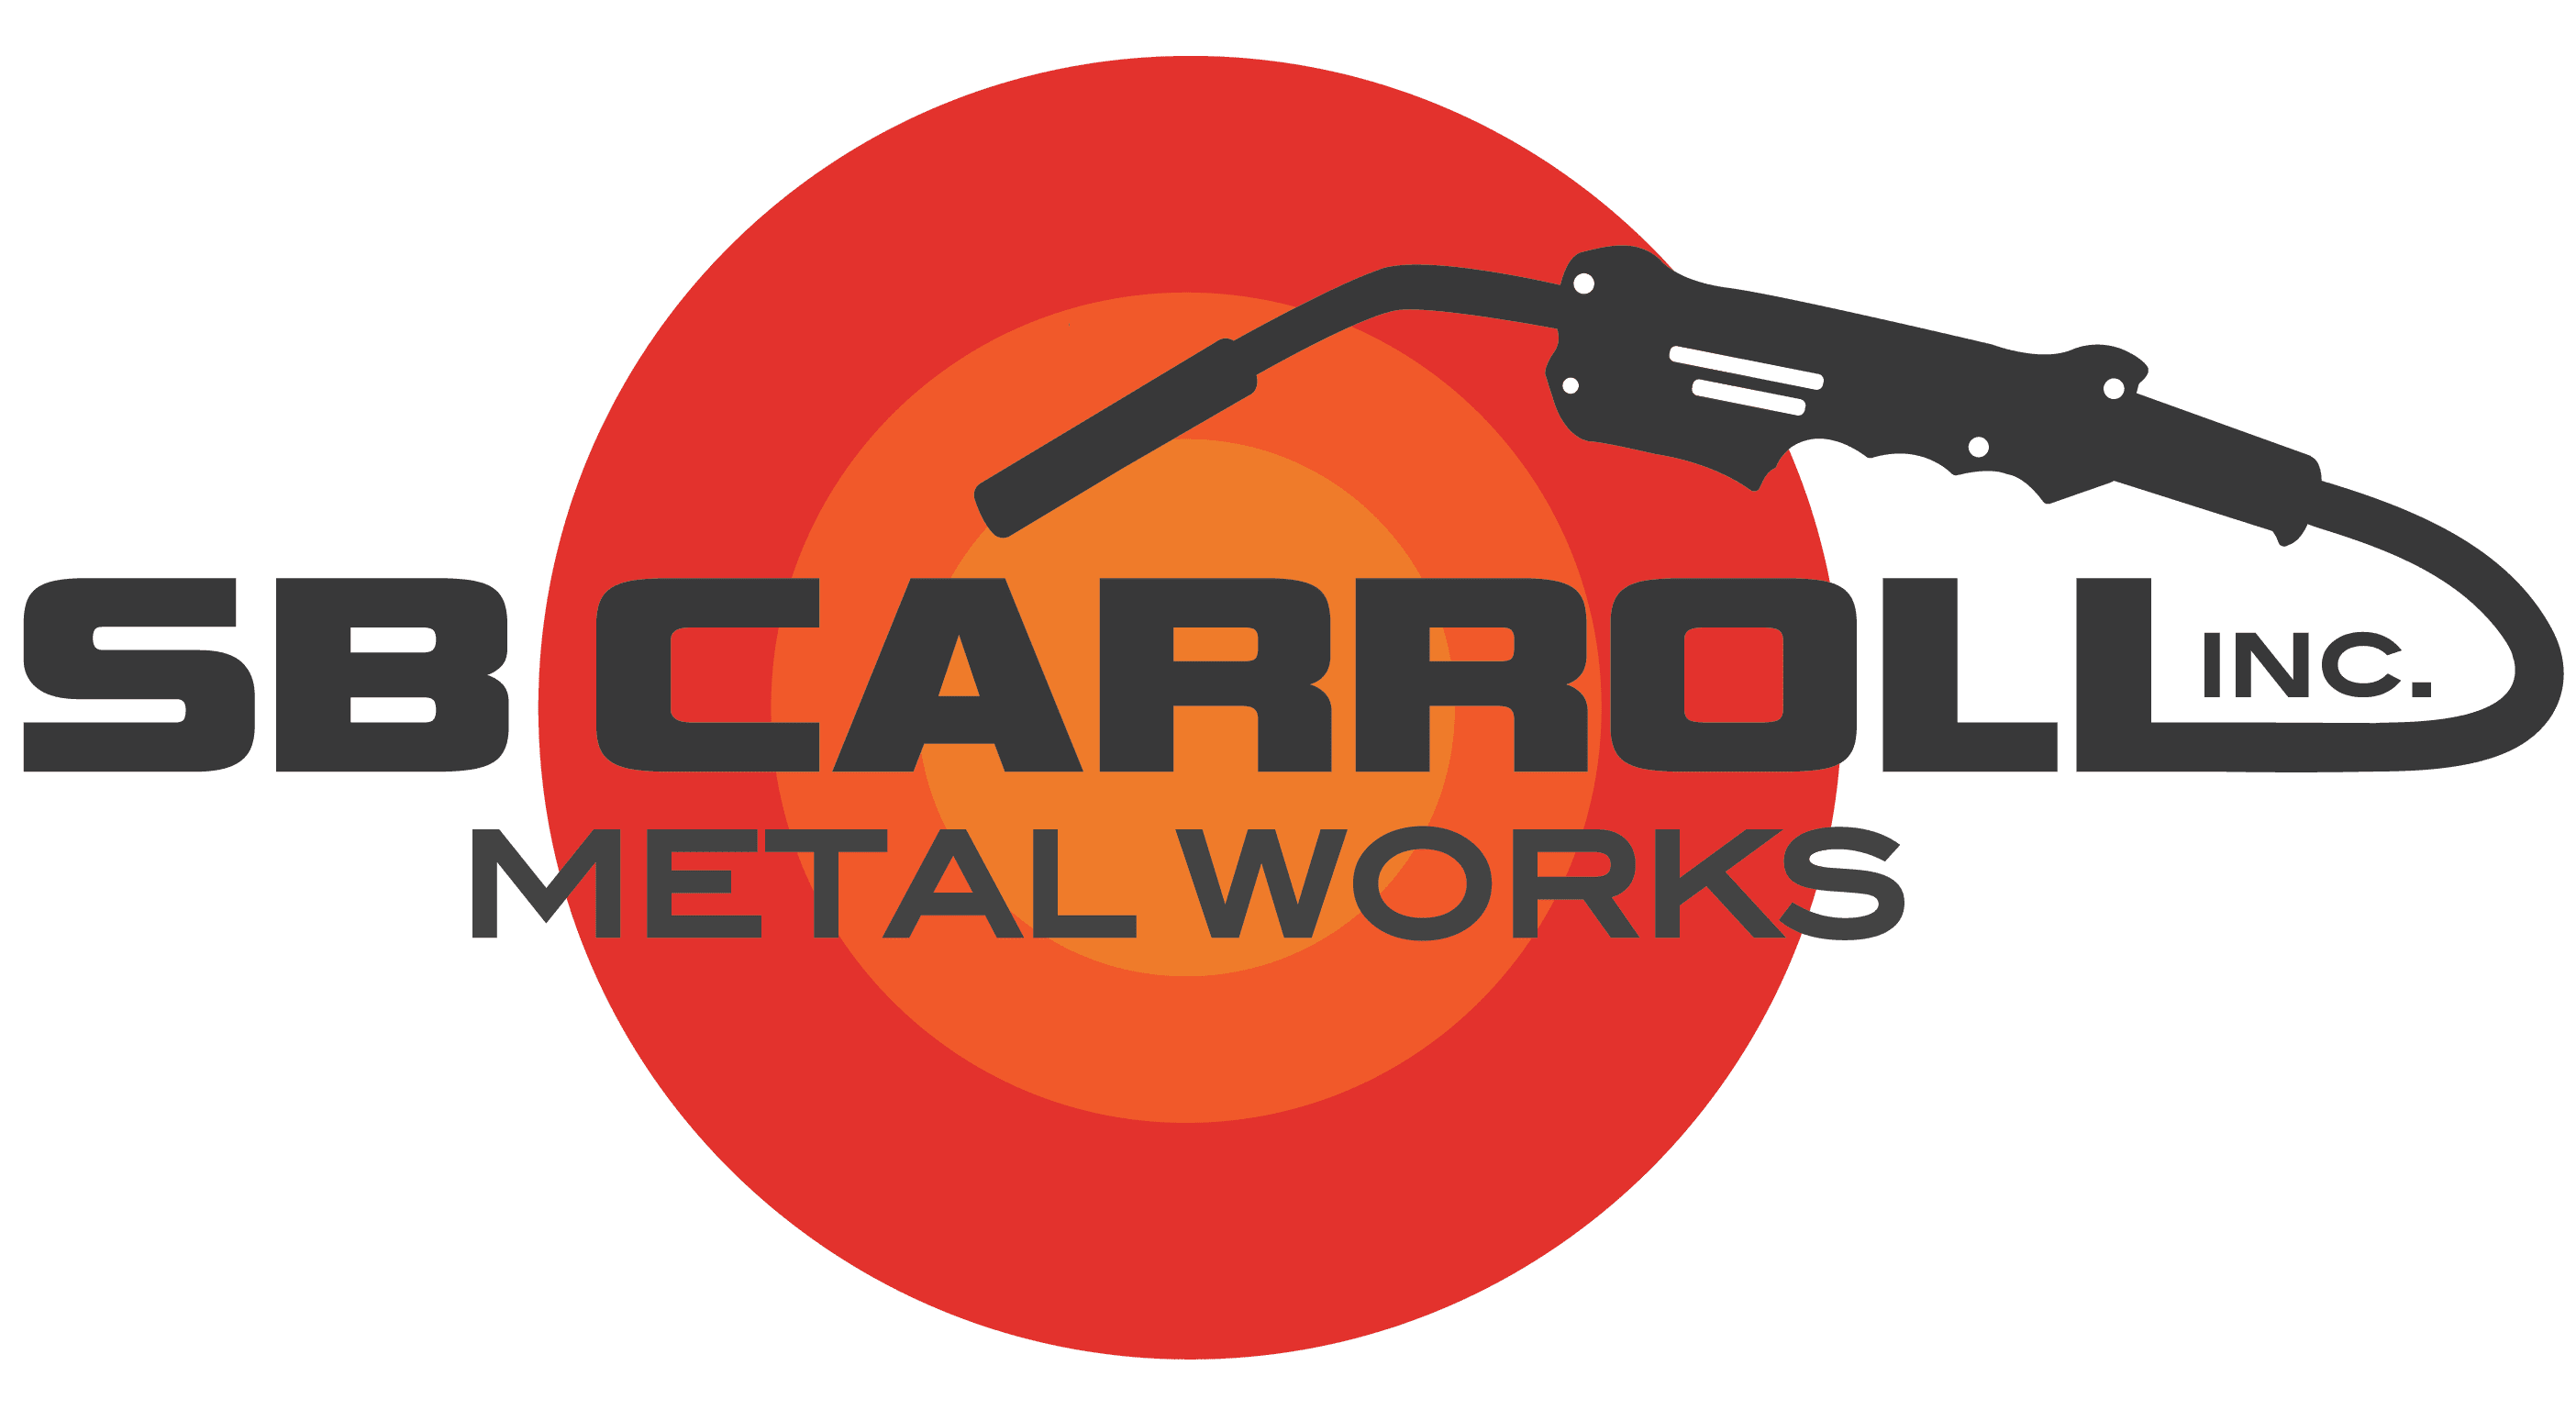 SB Carroll Inc Metal Works